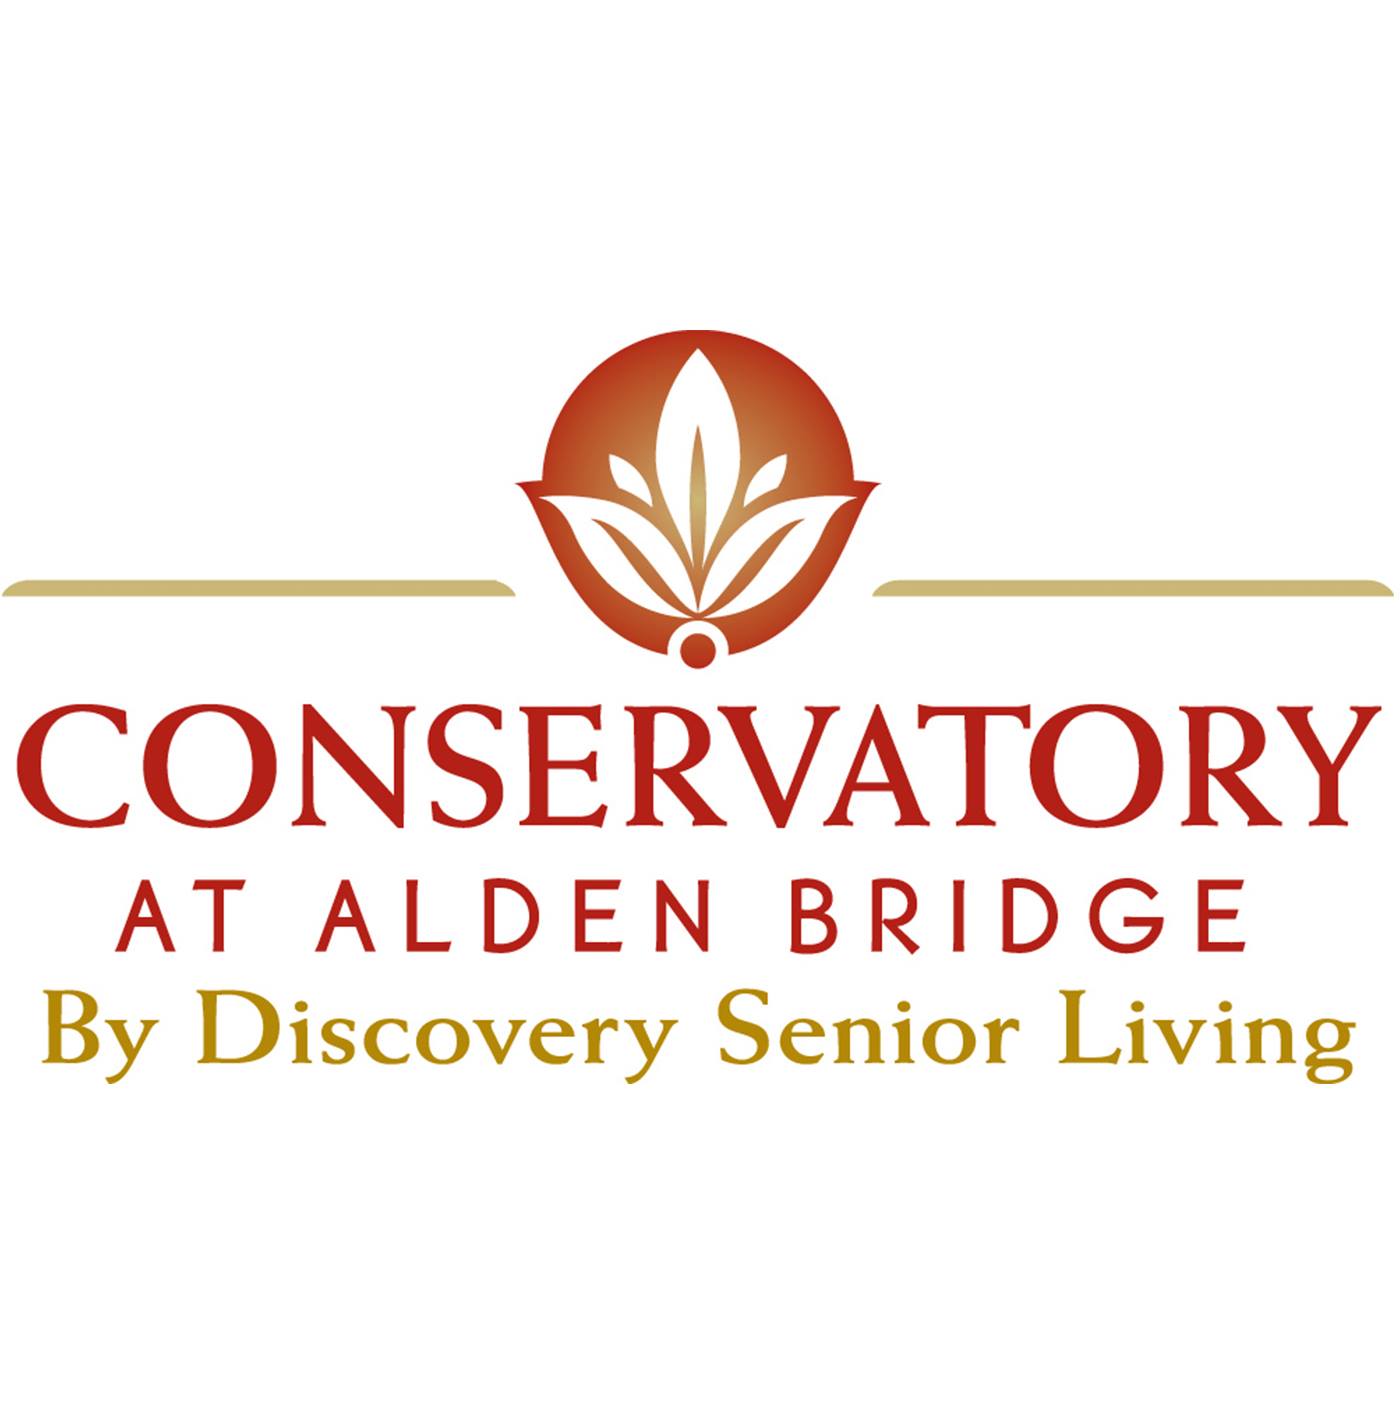 Conservatory at Alden Bridge